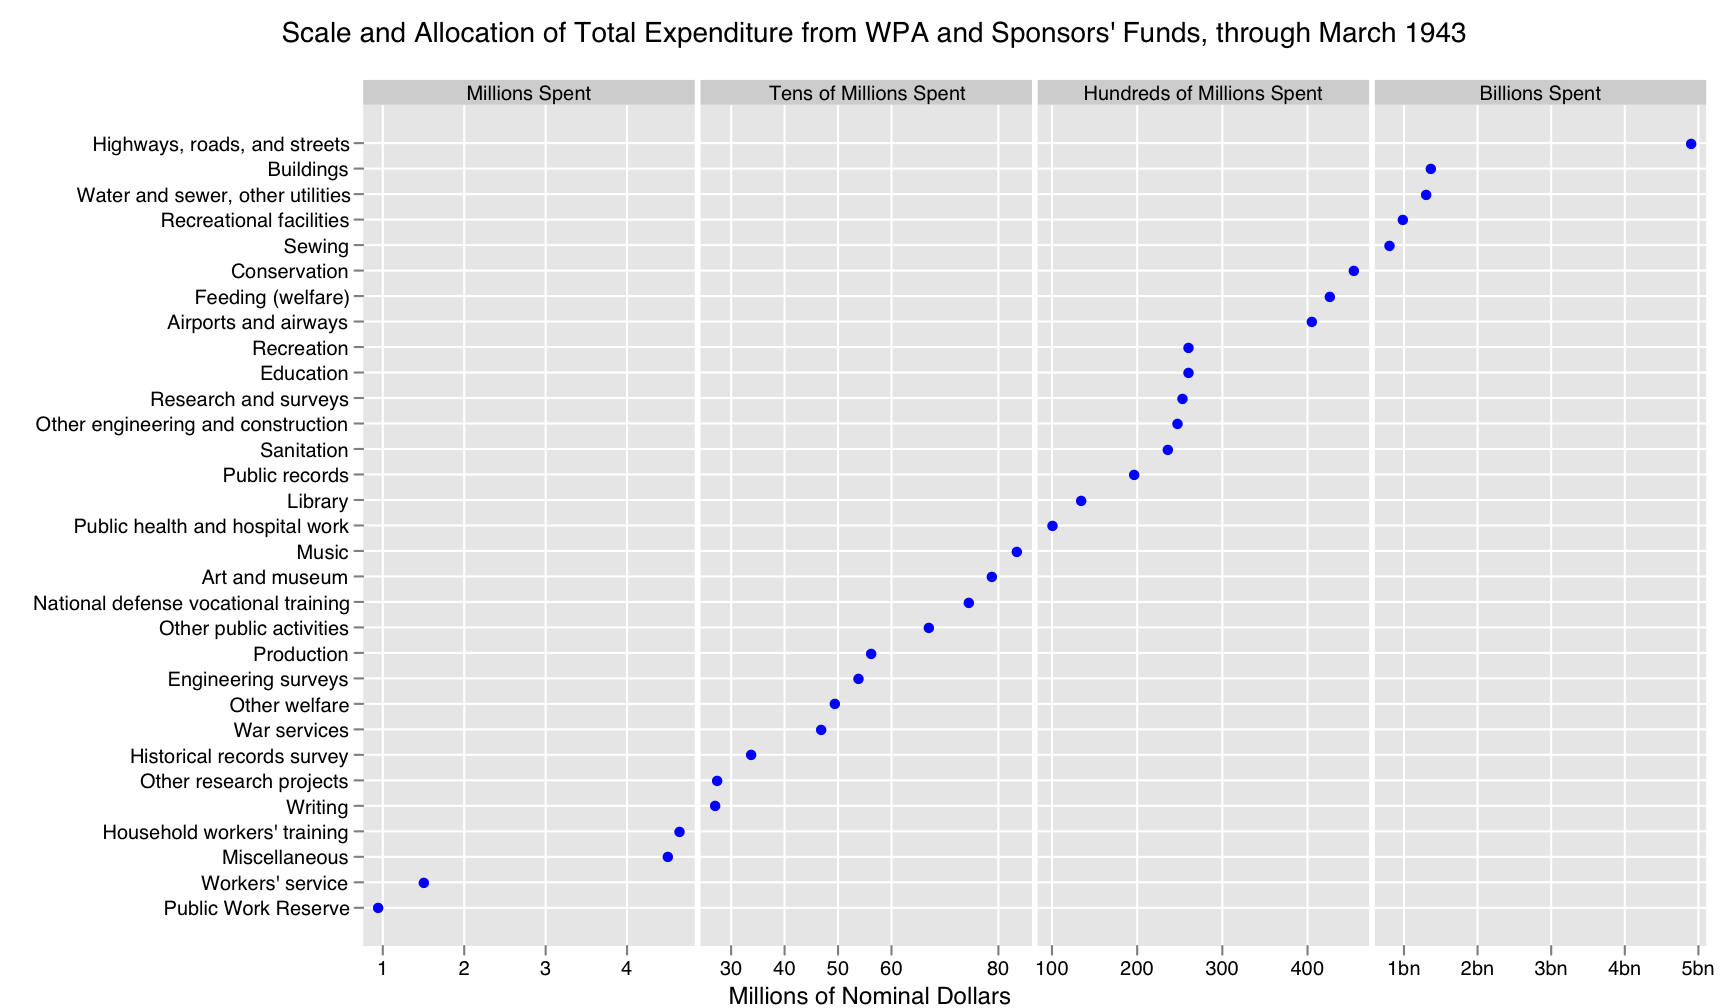 WPA expenditure